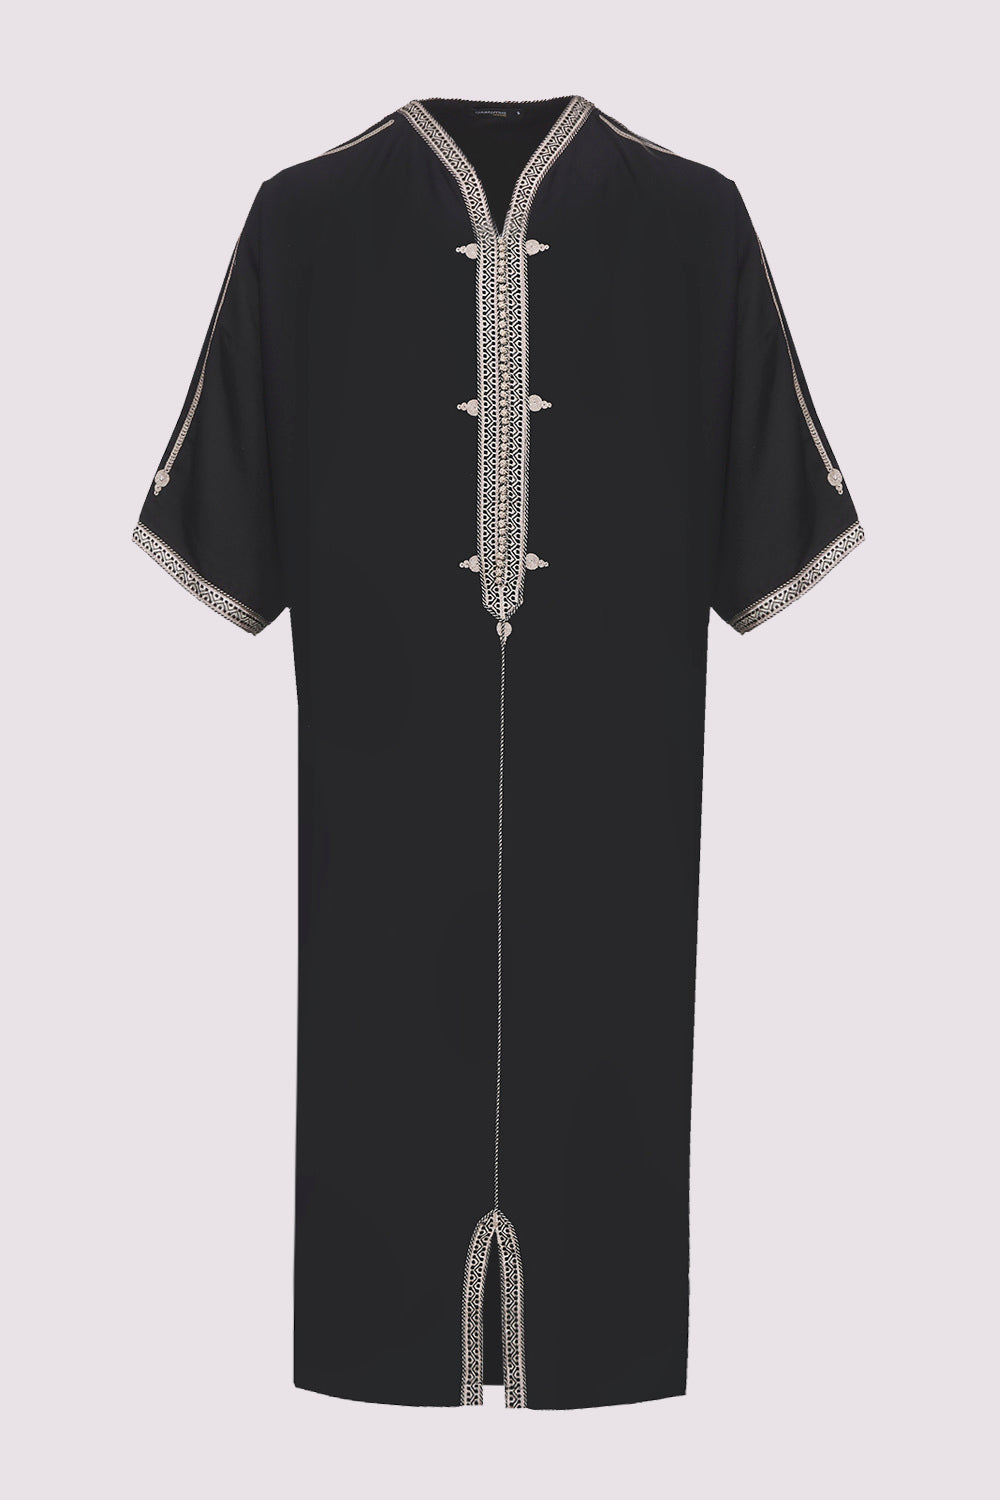 Gandoura Faiz Embroidered Collarless Short Sleeve Men's Cropped Robe Thobe in Black